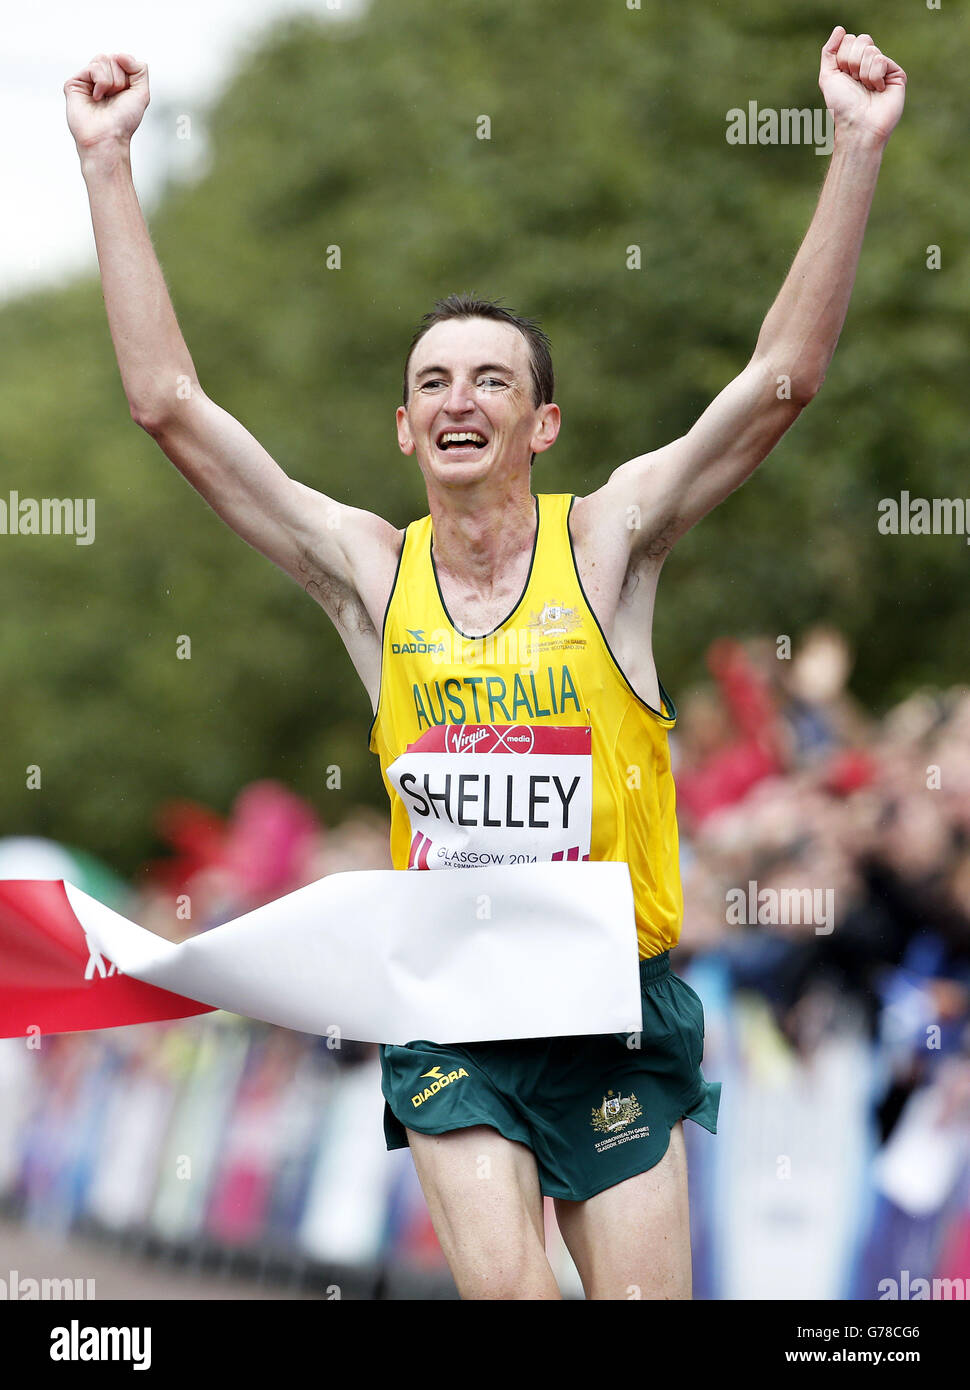 Australia's Michael Shelley wins the men's marathon during the 2014 Commonwealth Games in Glasgow. Stock Photo